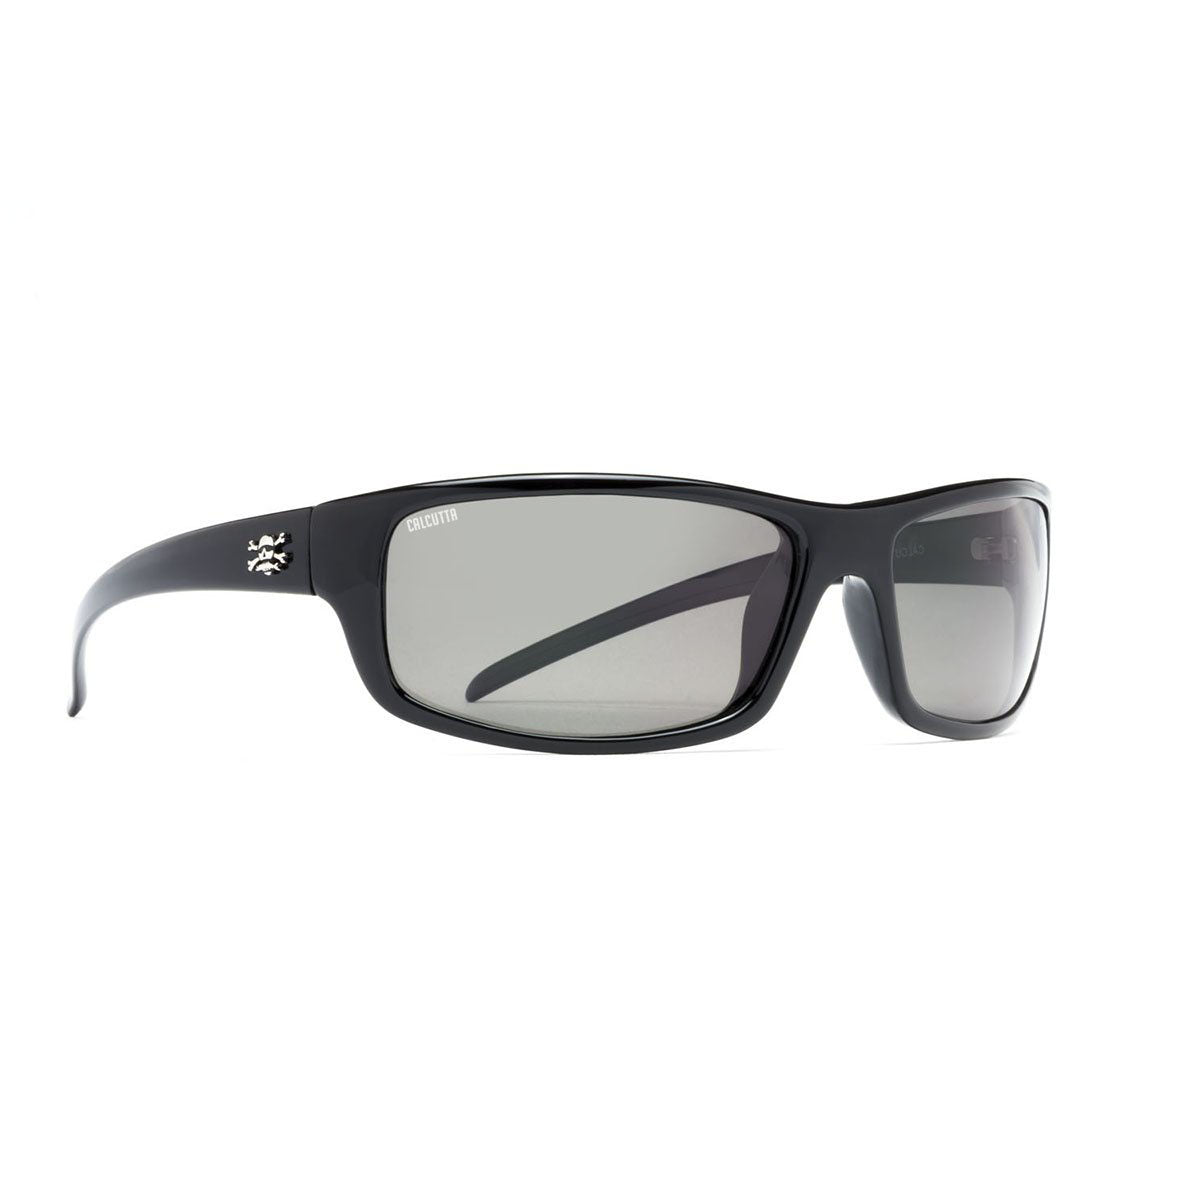 Calcutta Meads Polarized Sunglasses Shiny Black/Gray Lens